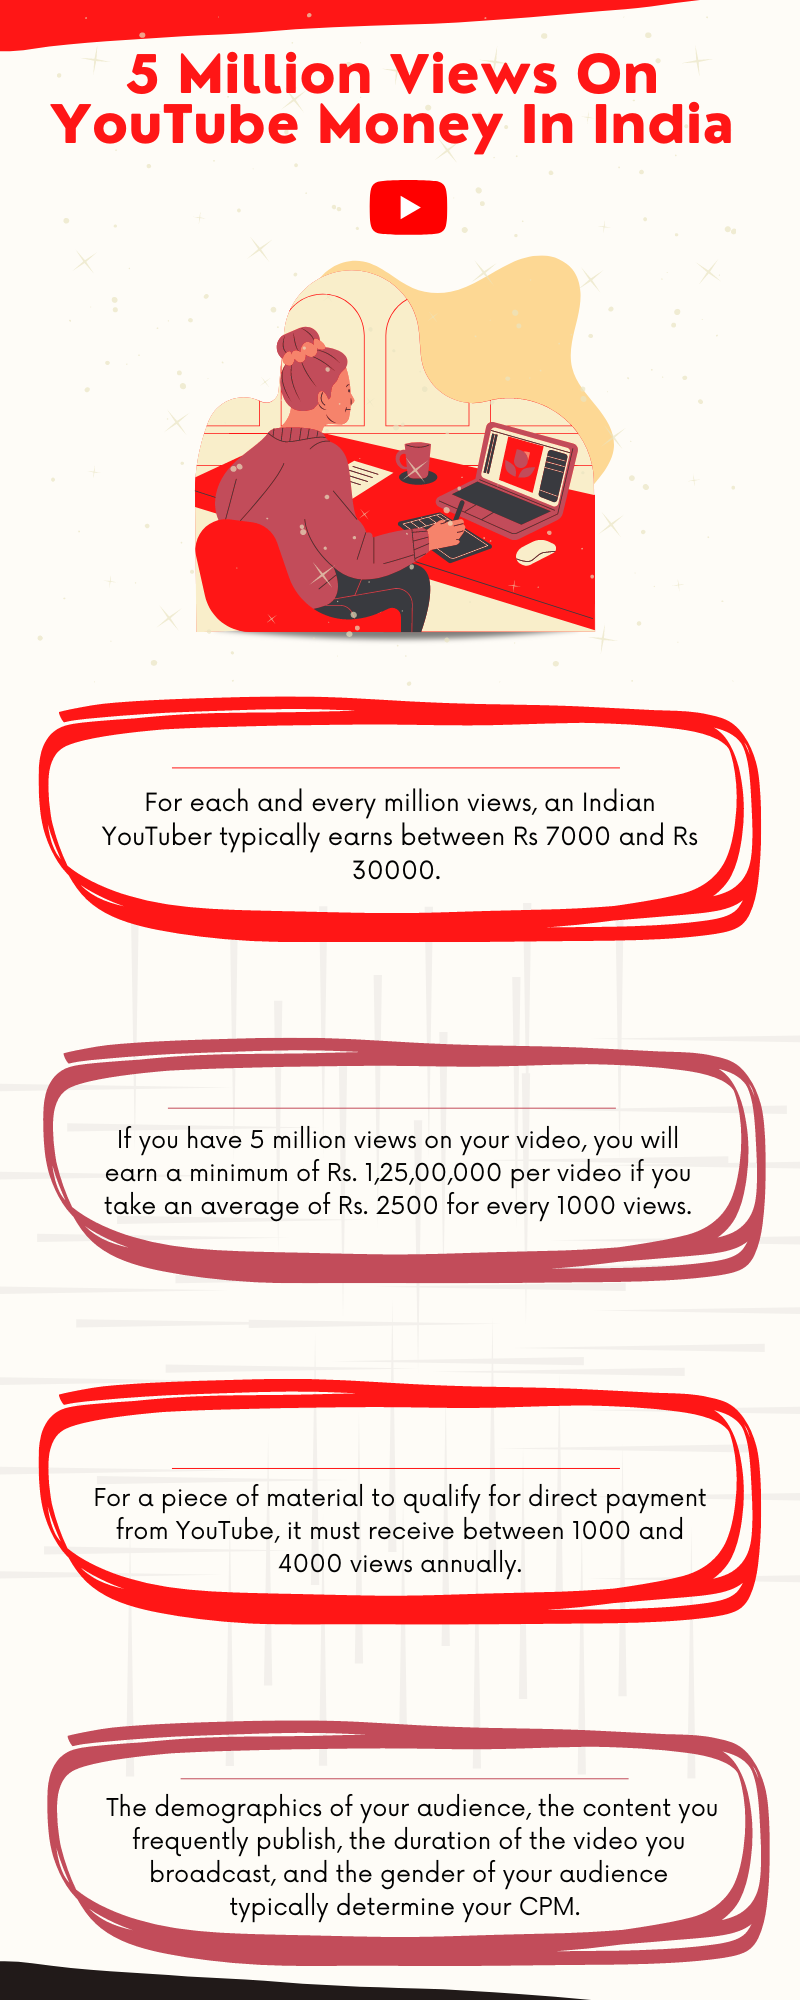 5 Million Views On YouTube Money In India